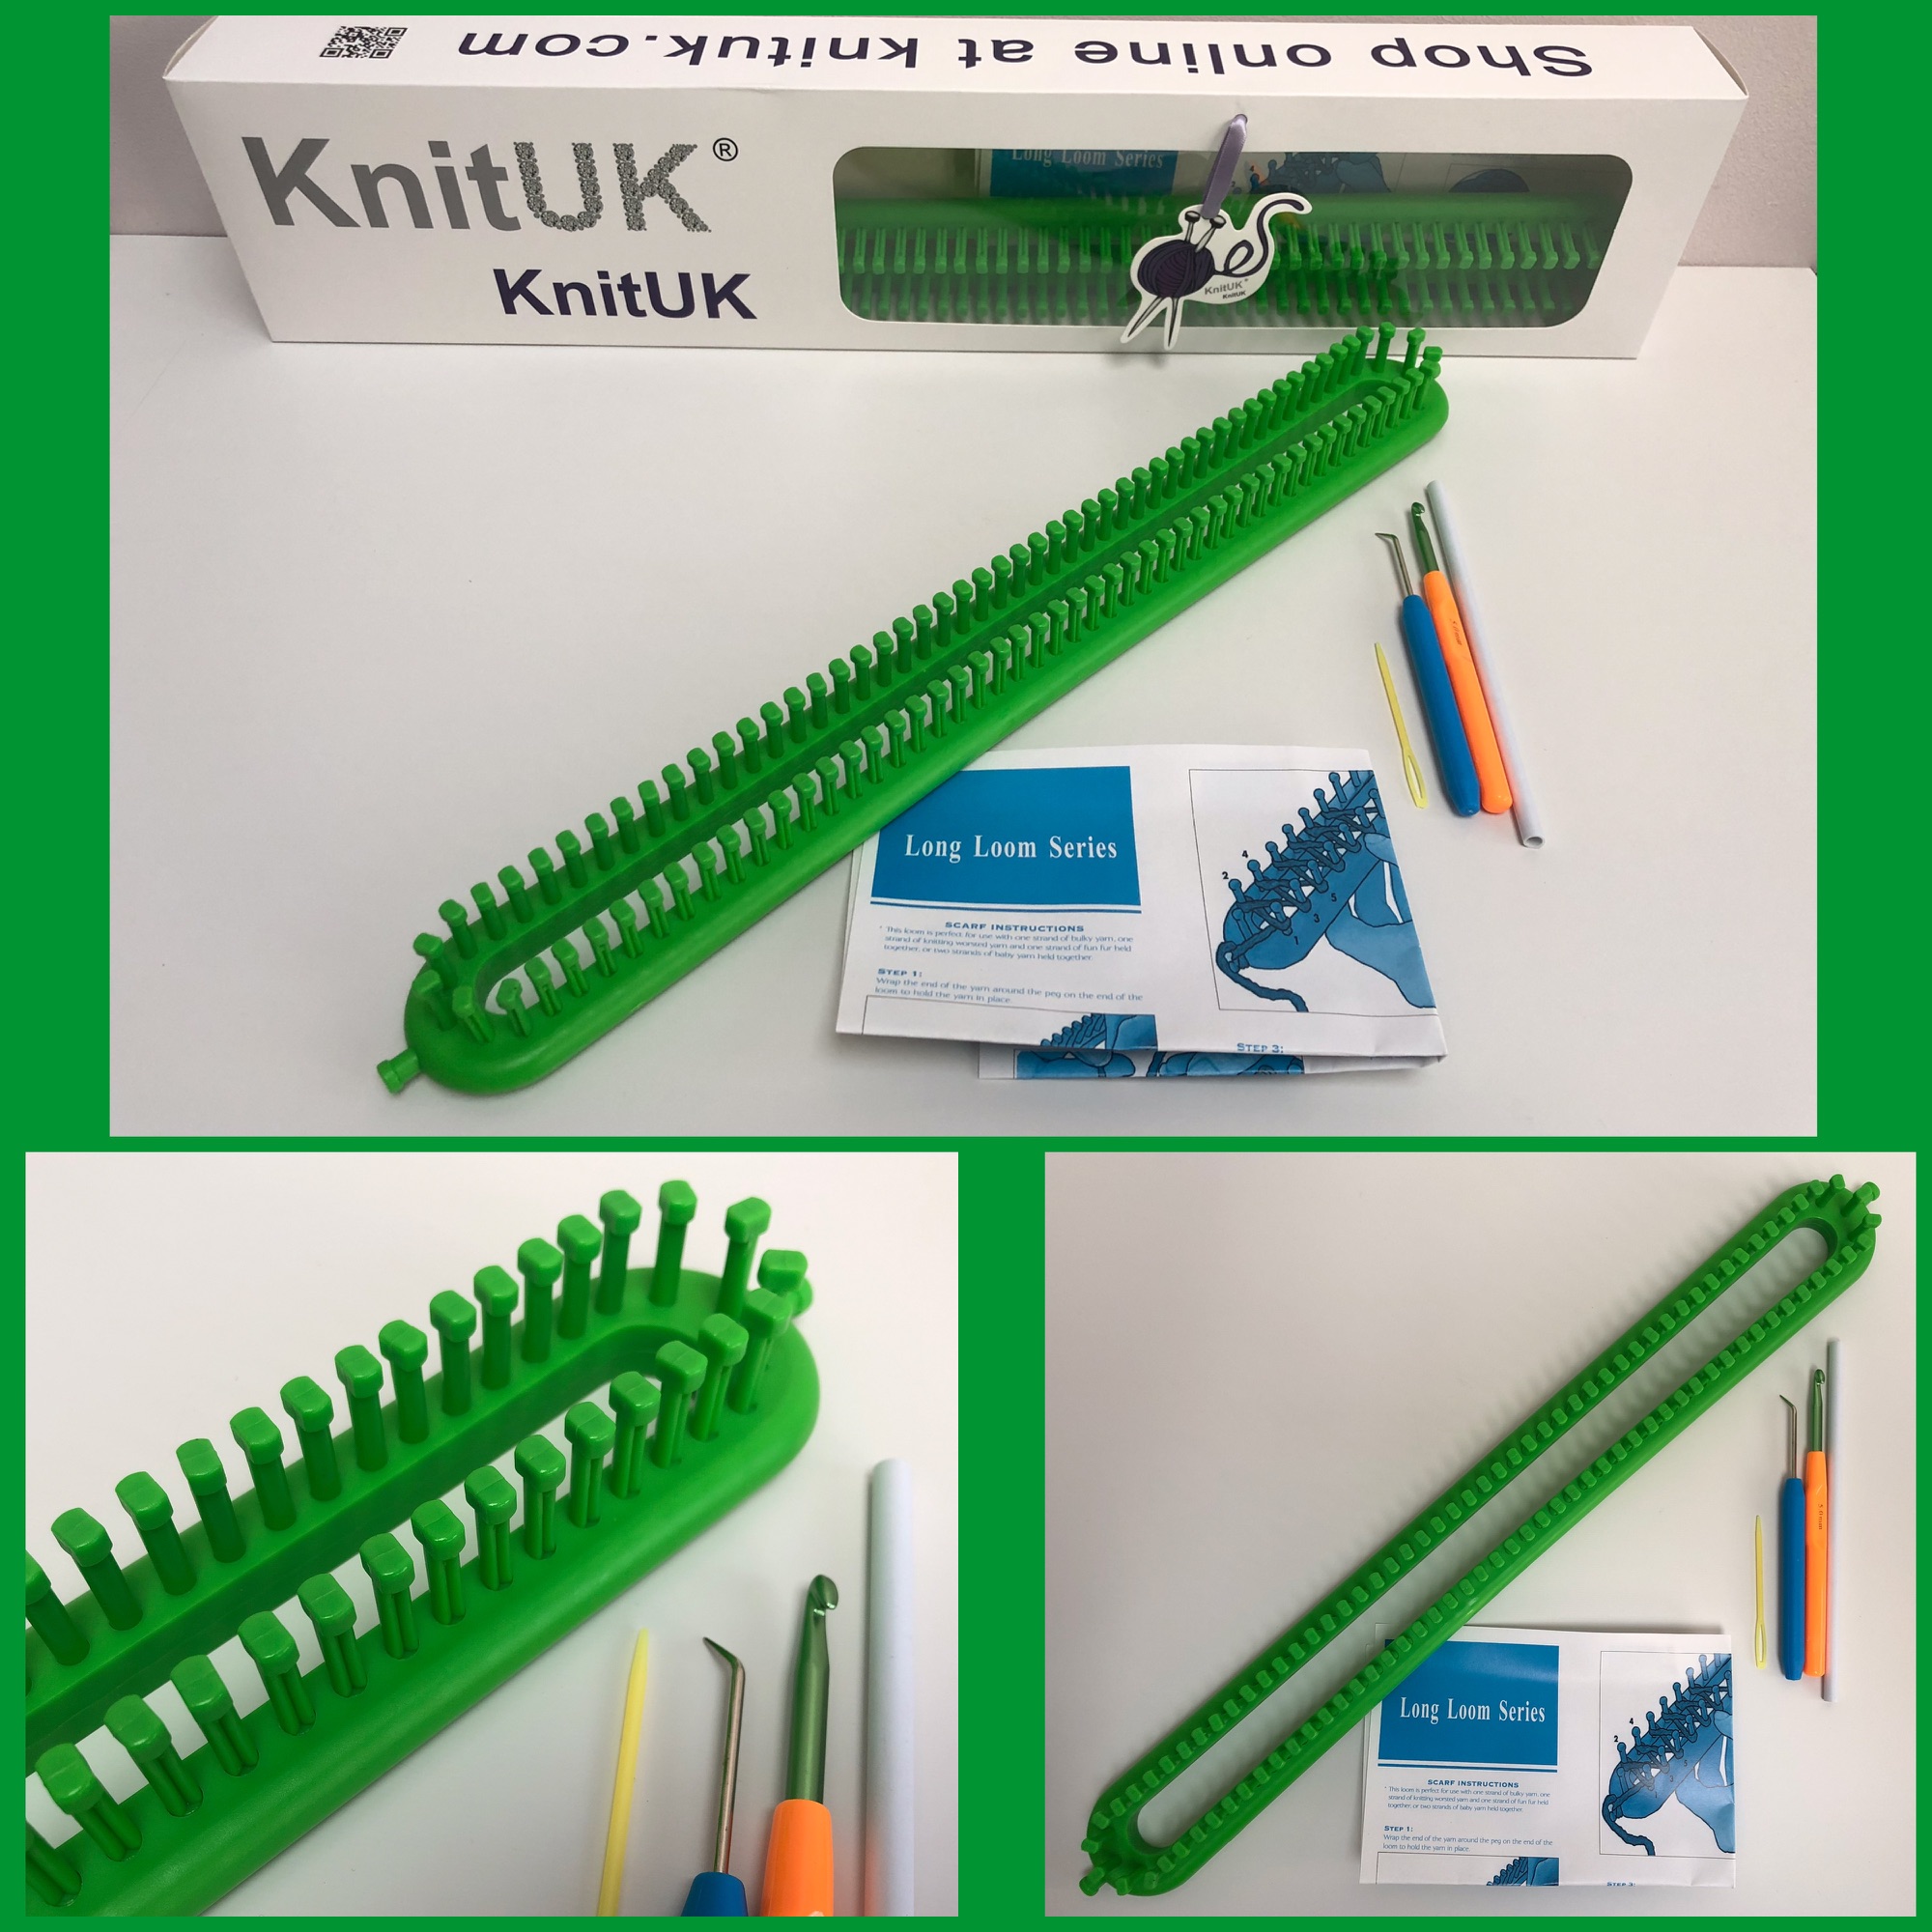 KnitUK long green knitting loom complete